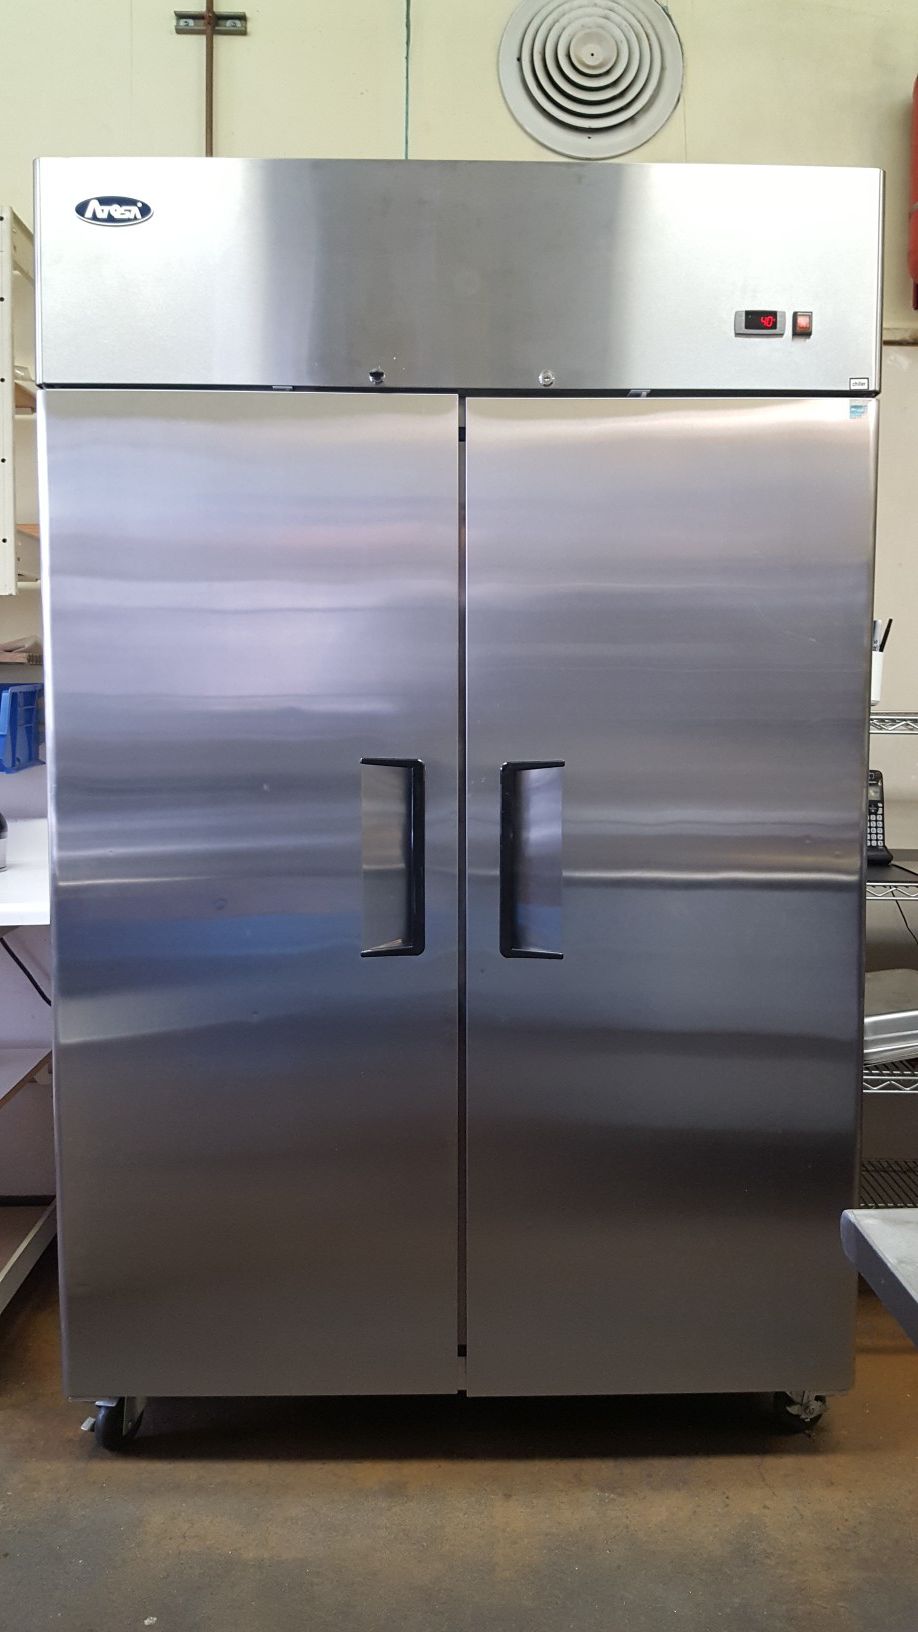 Atosa 2-door refrigerator with extra shelves